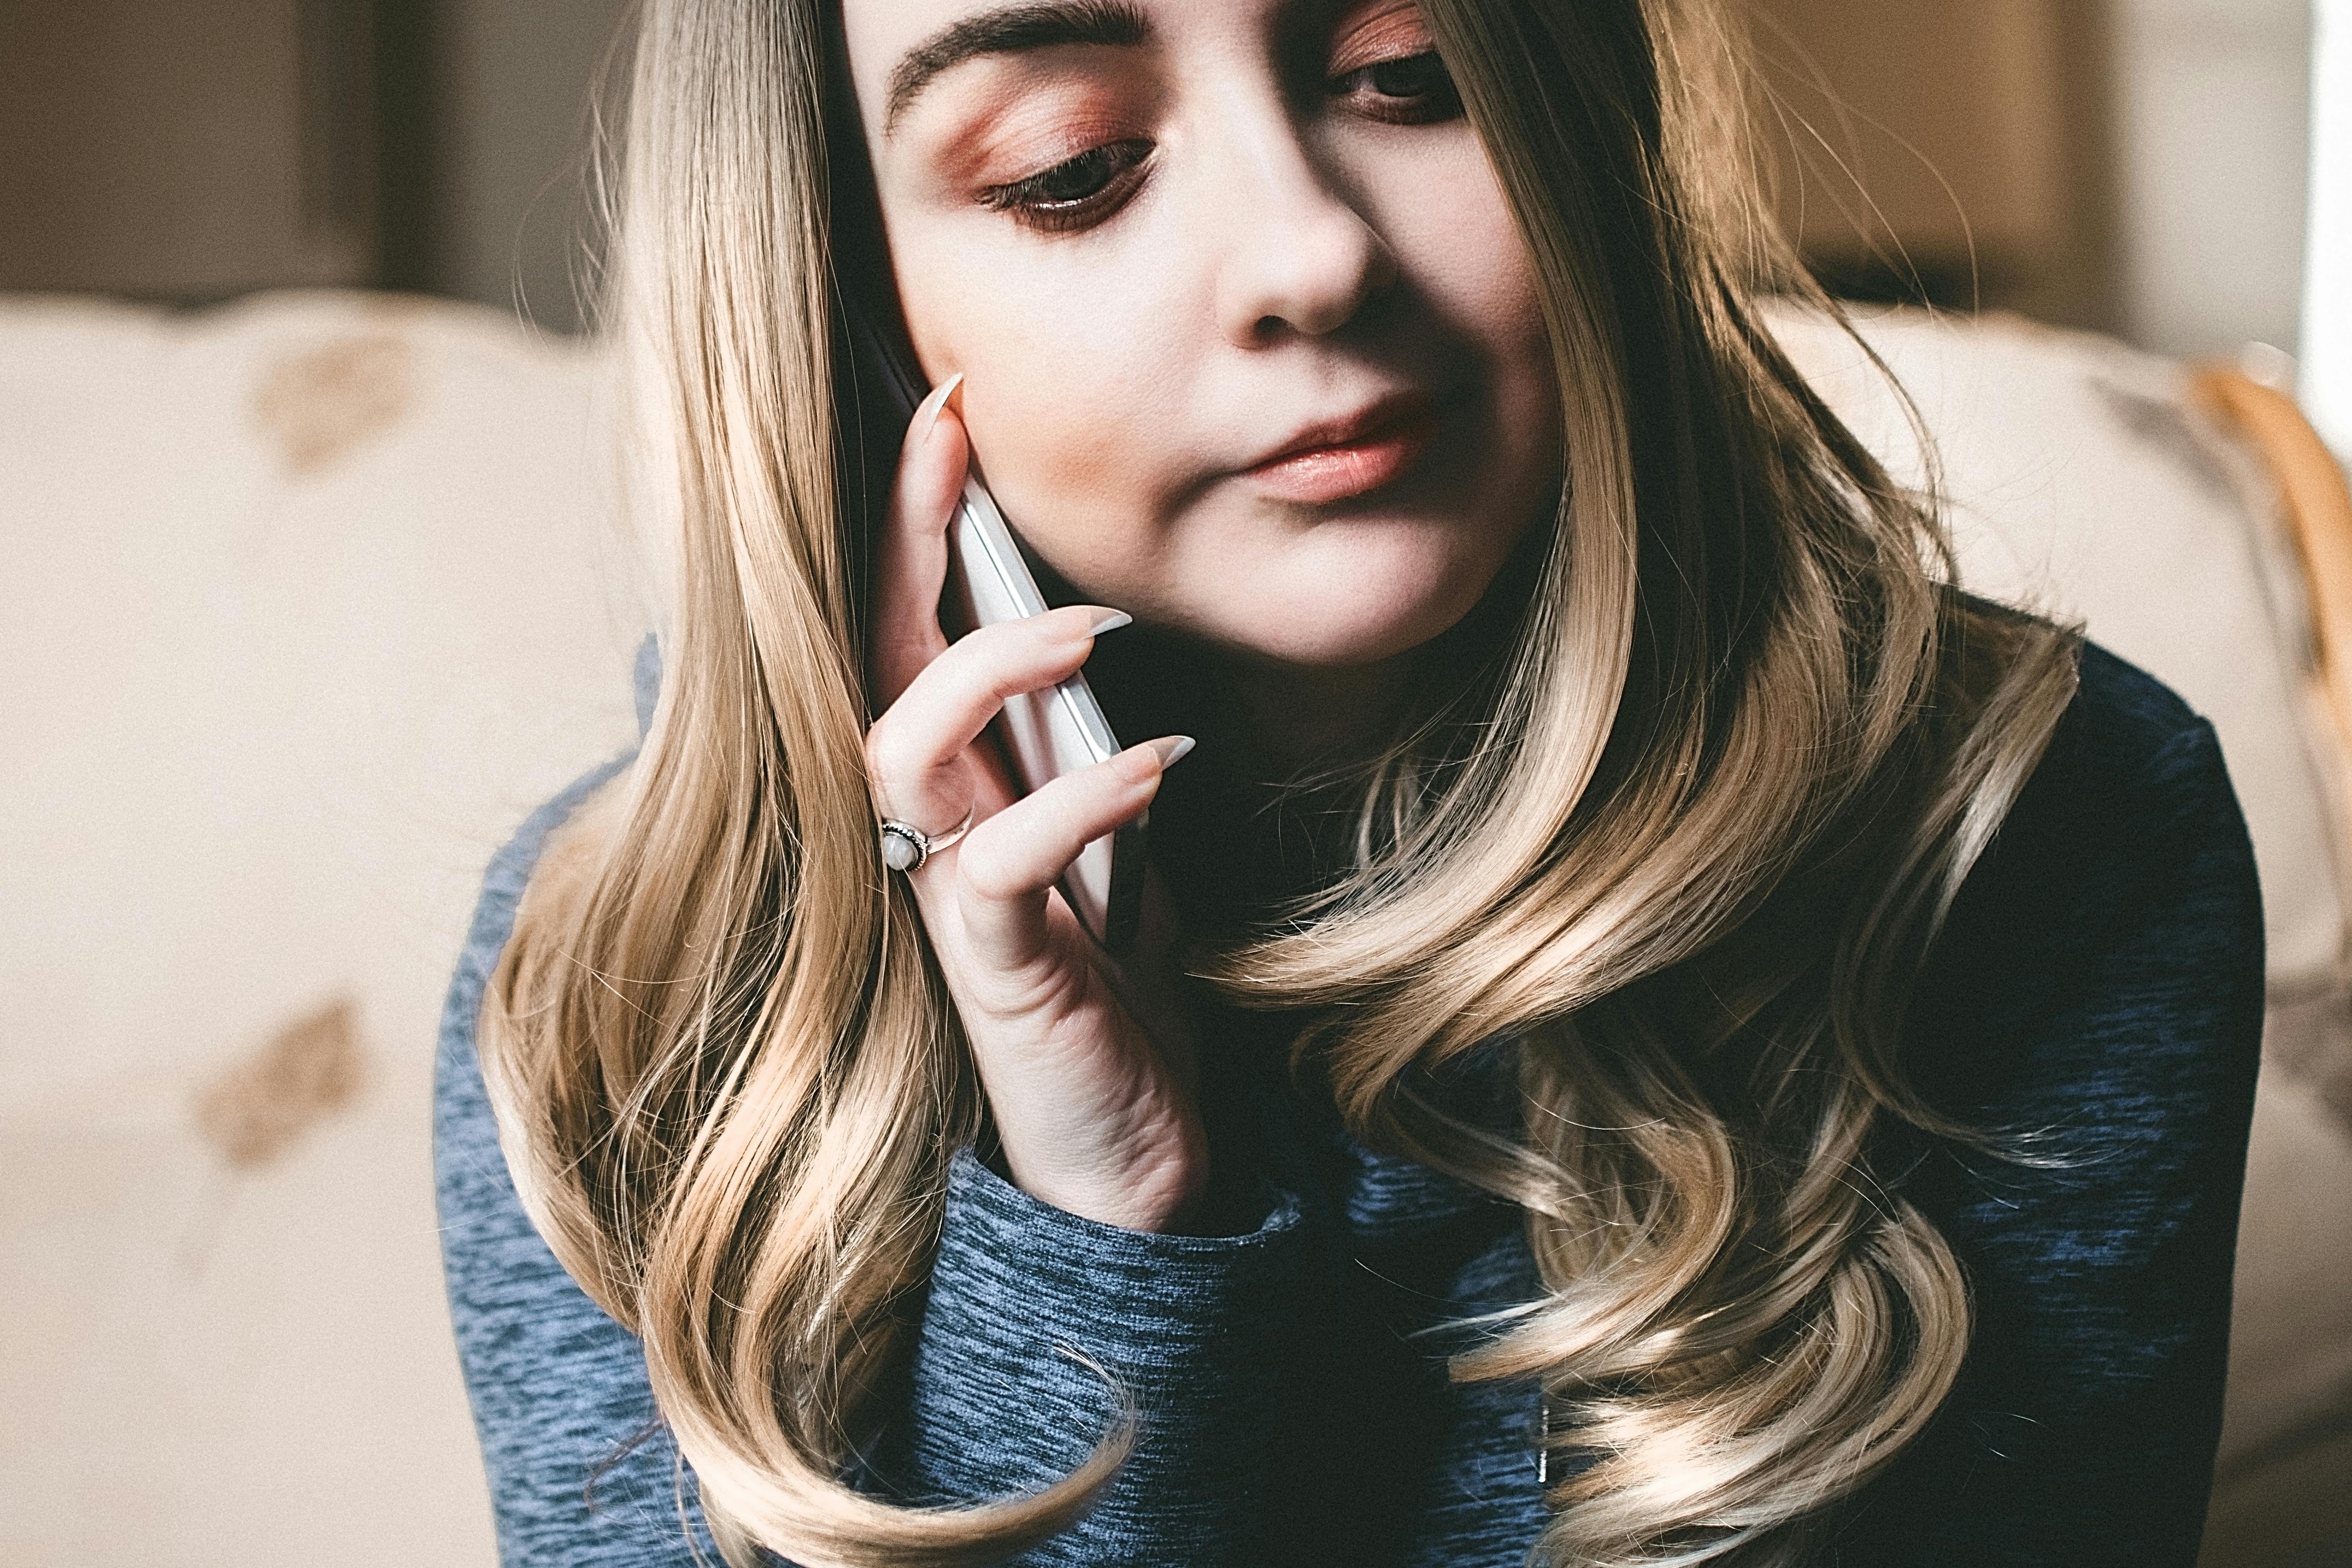 Teenager-Mädchen am Telefon | Quelle: Pexels